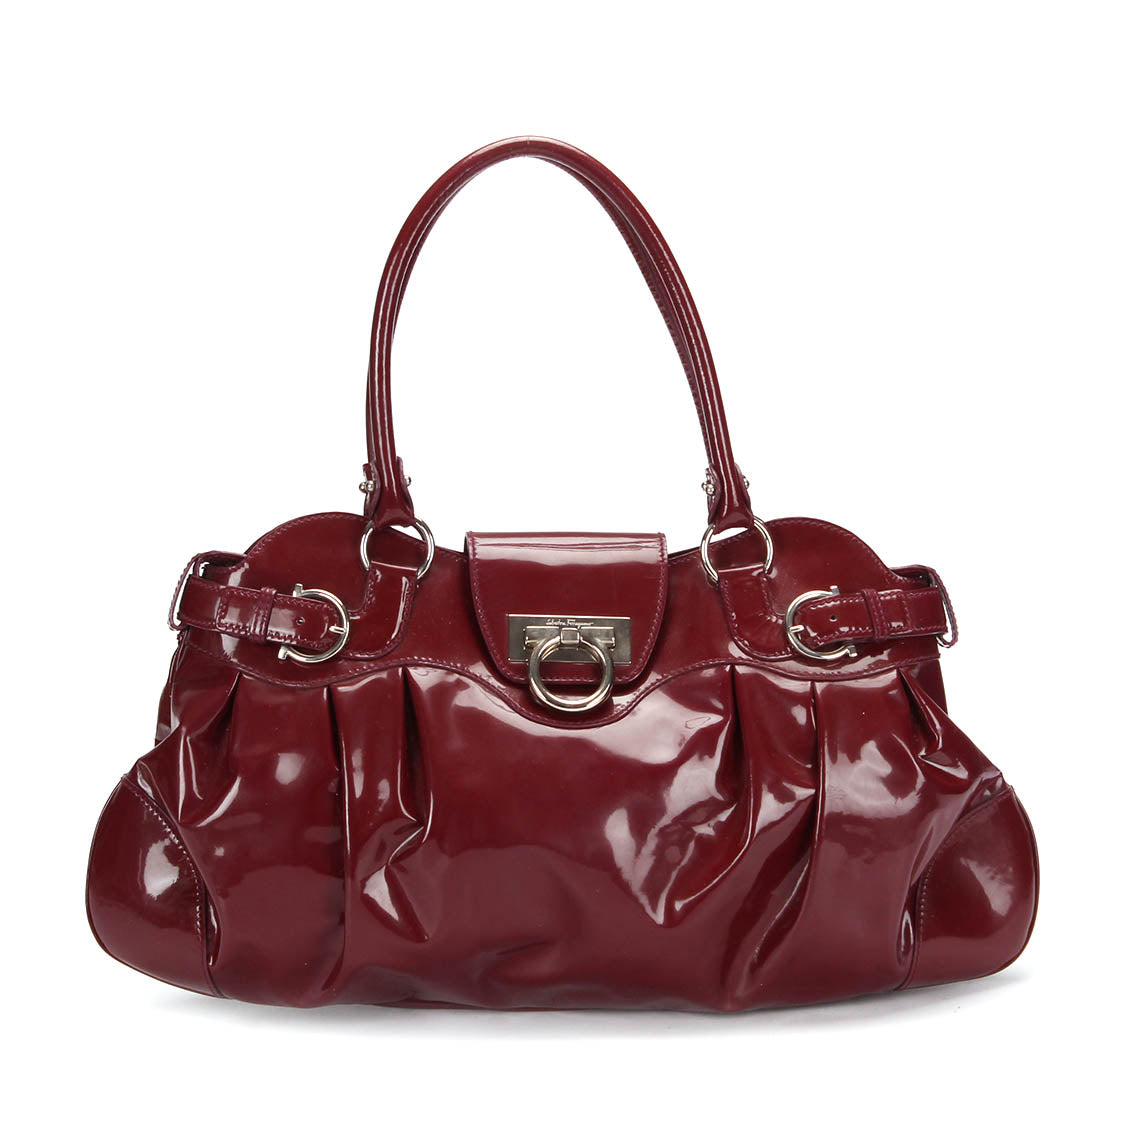 Gancini Patent Leather Handbag